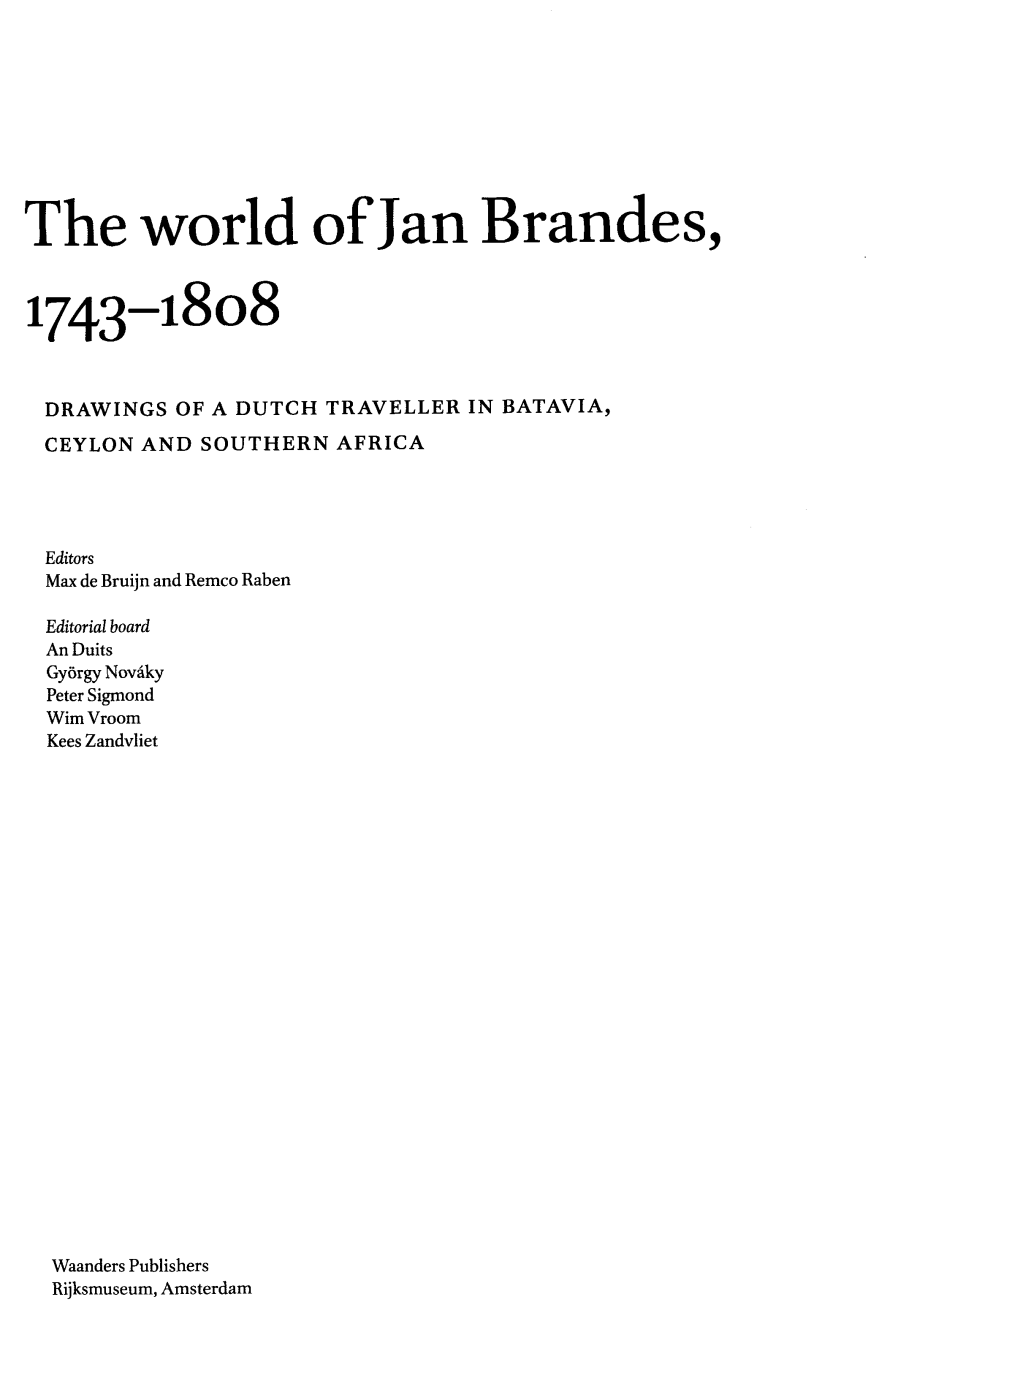 The World of Jan Brandes